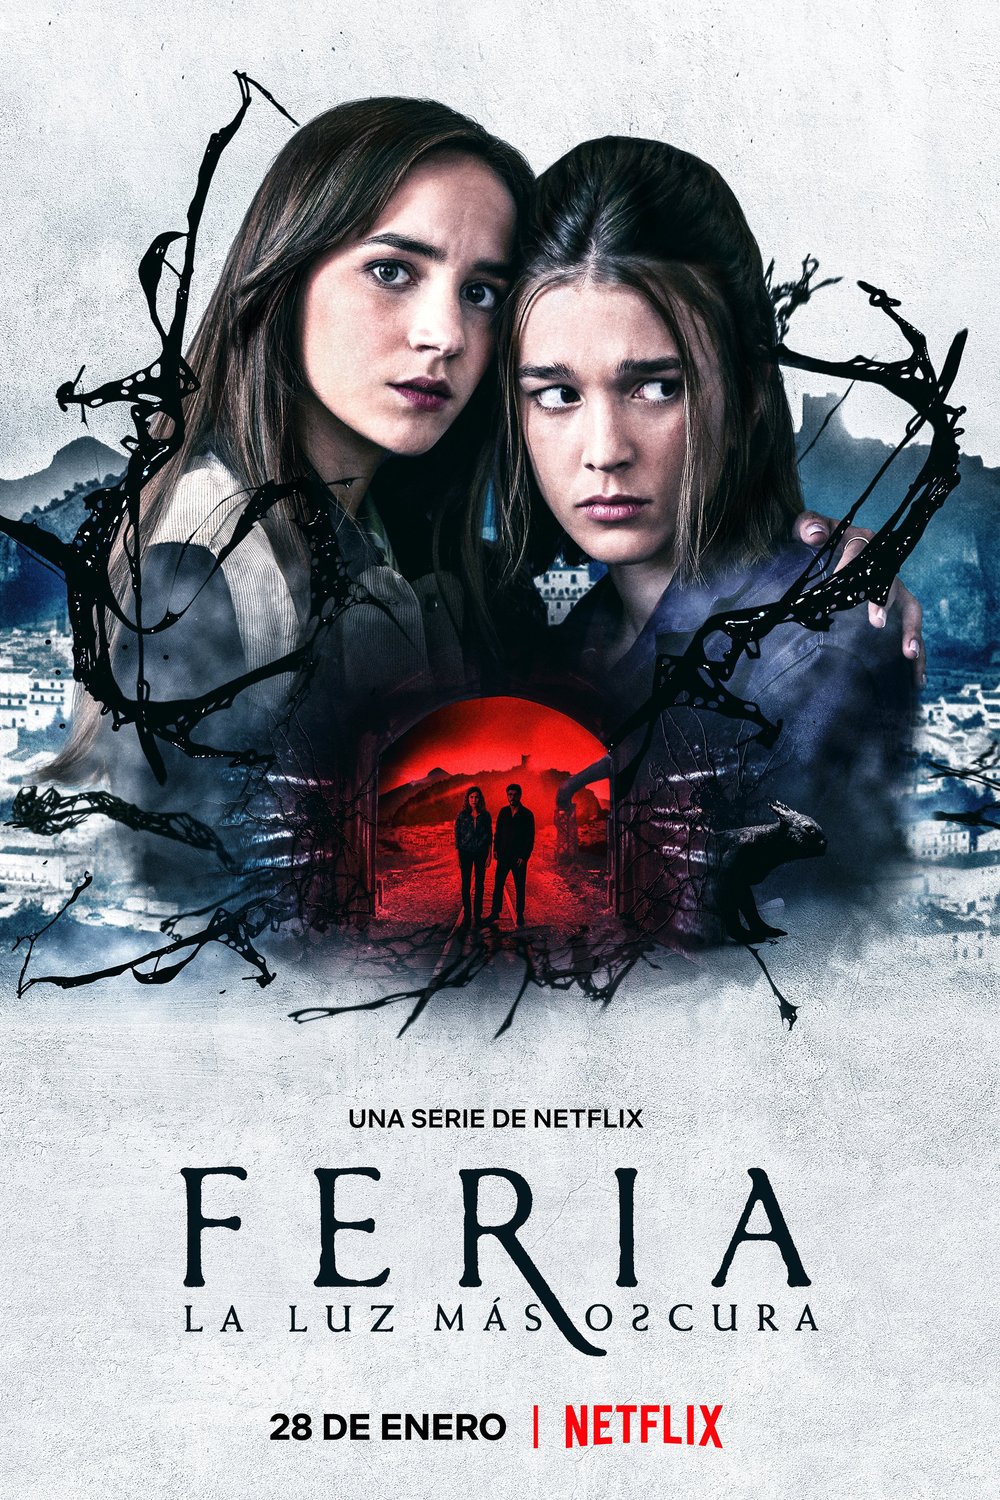 Spanish poster of the movie Feria: The Darkest Light